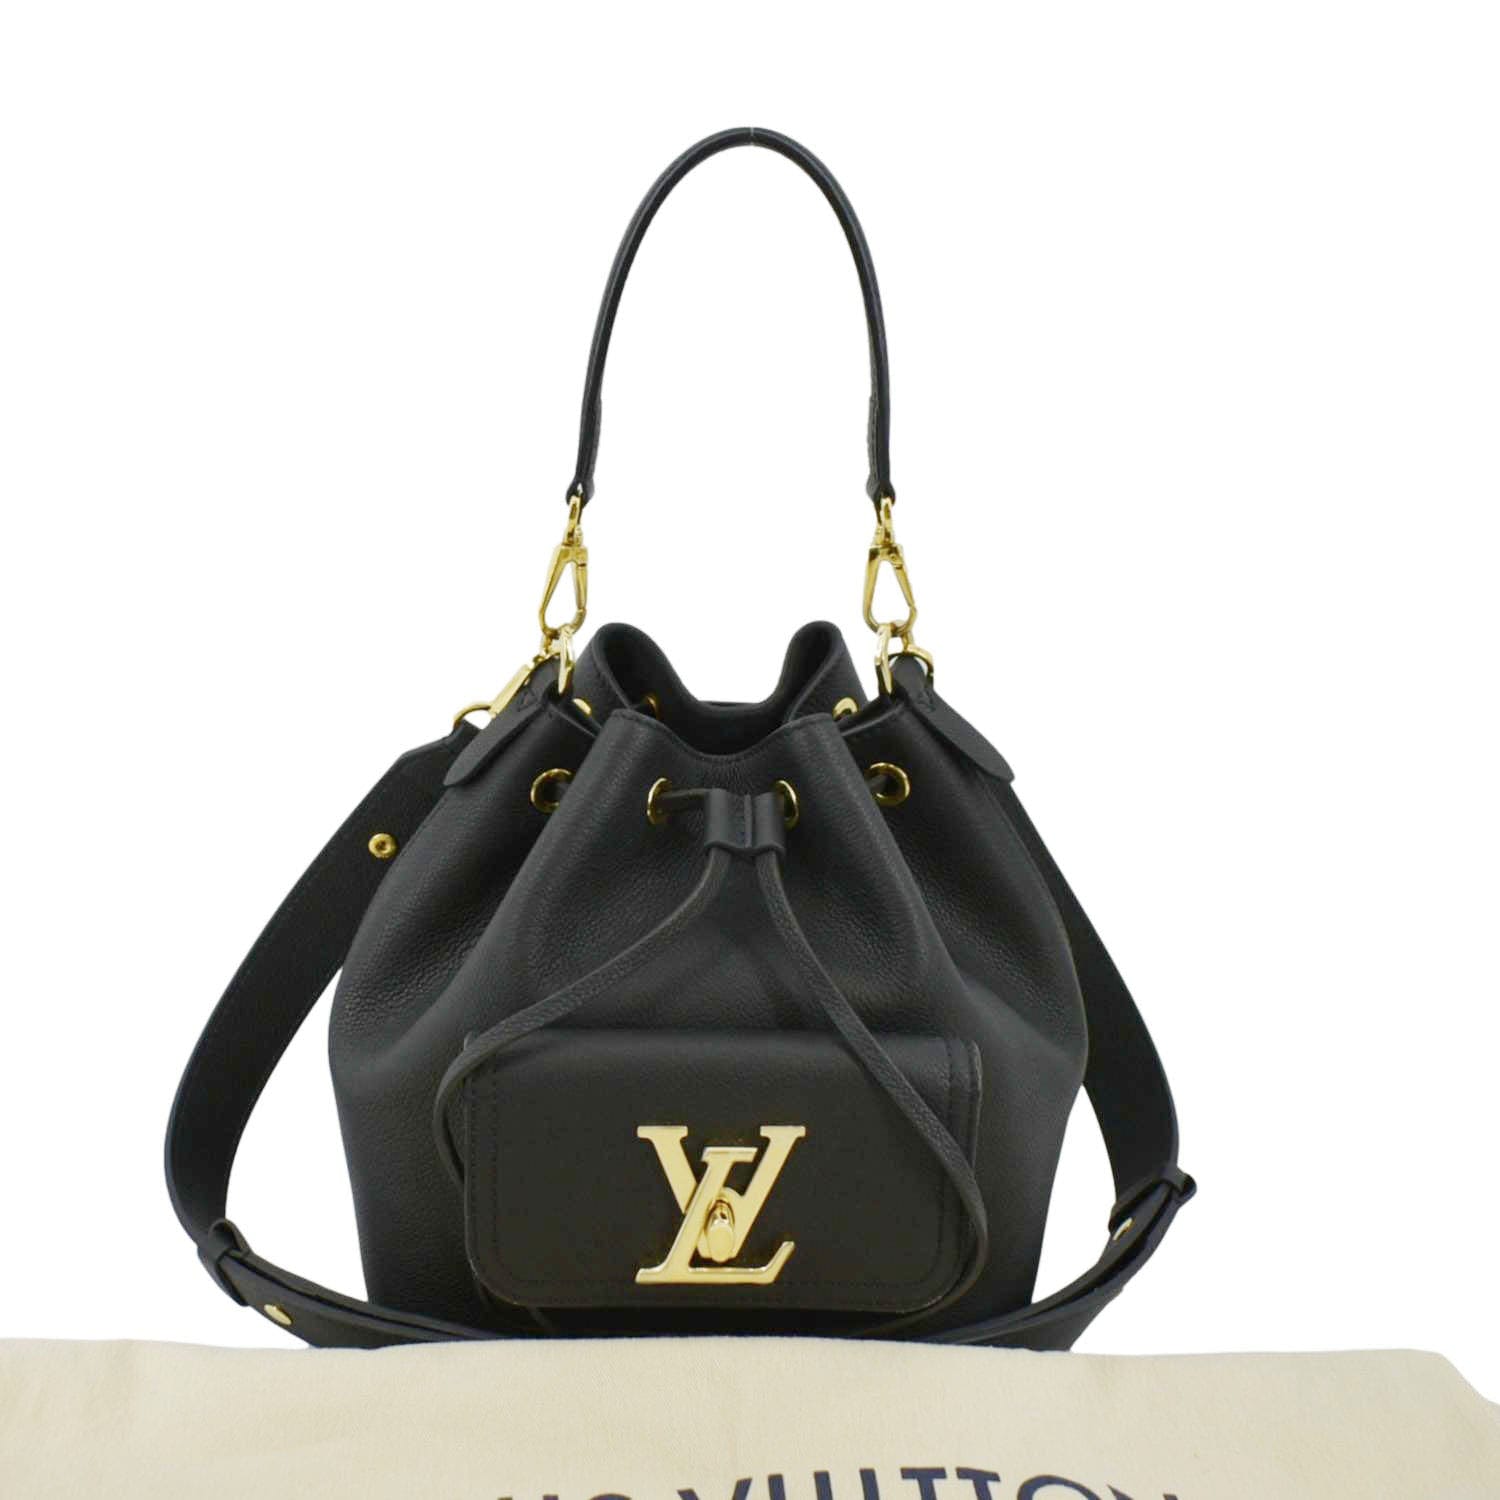 Louis Vuitton Lockme Pocket Bucket Bag Leather Neutral